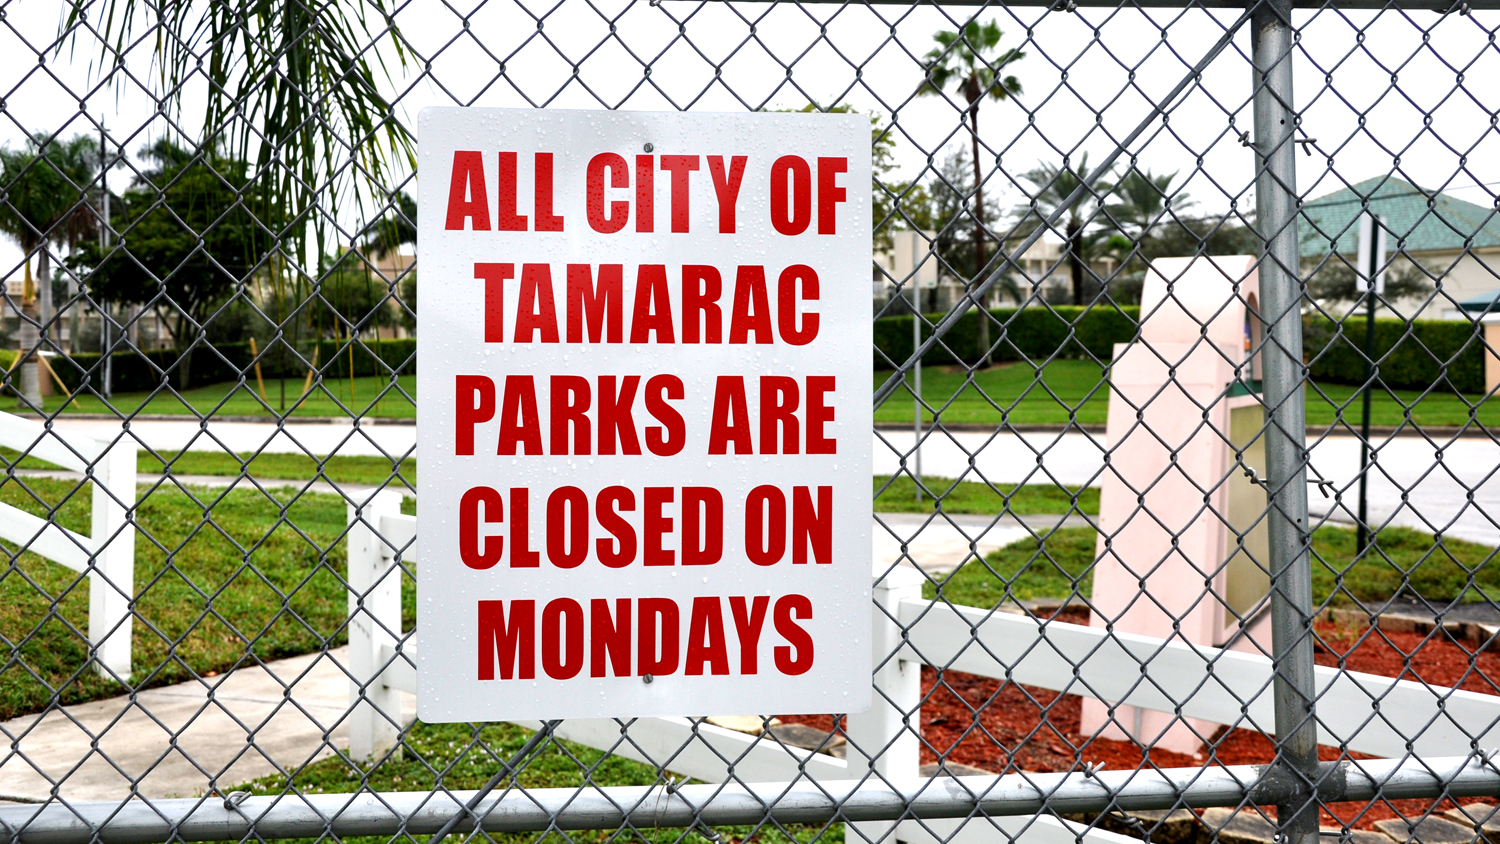 Tamarac Parks Still Closed on Mondays